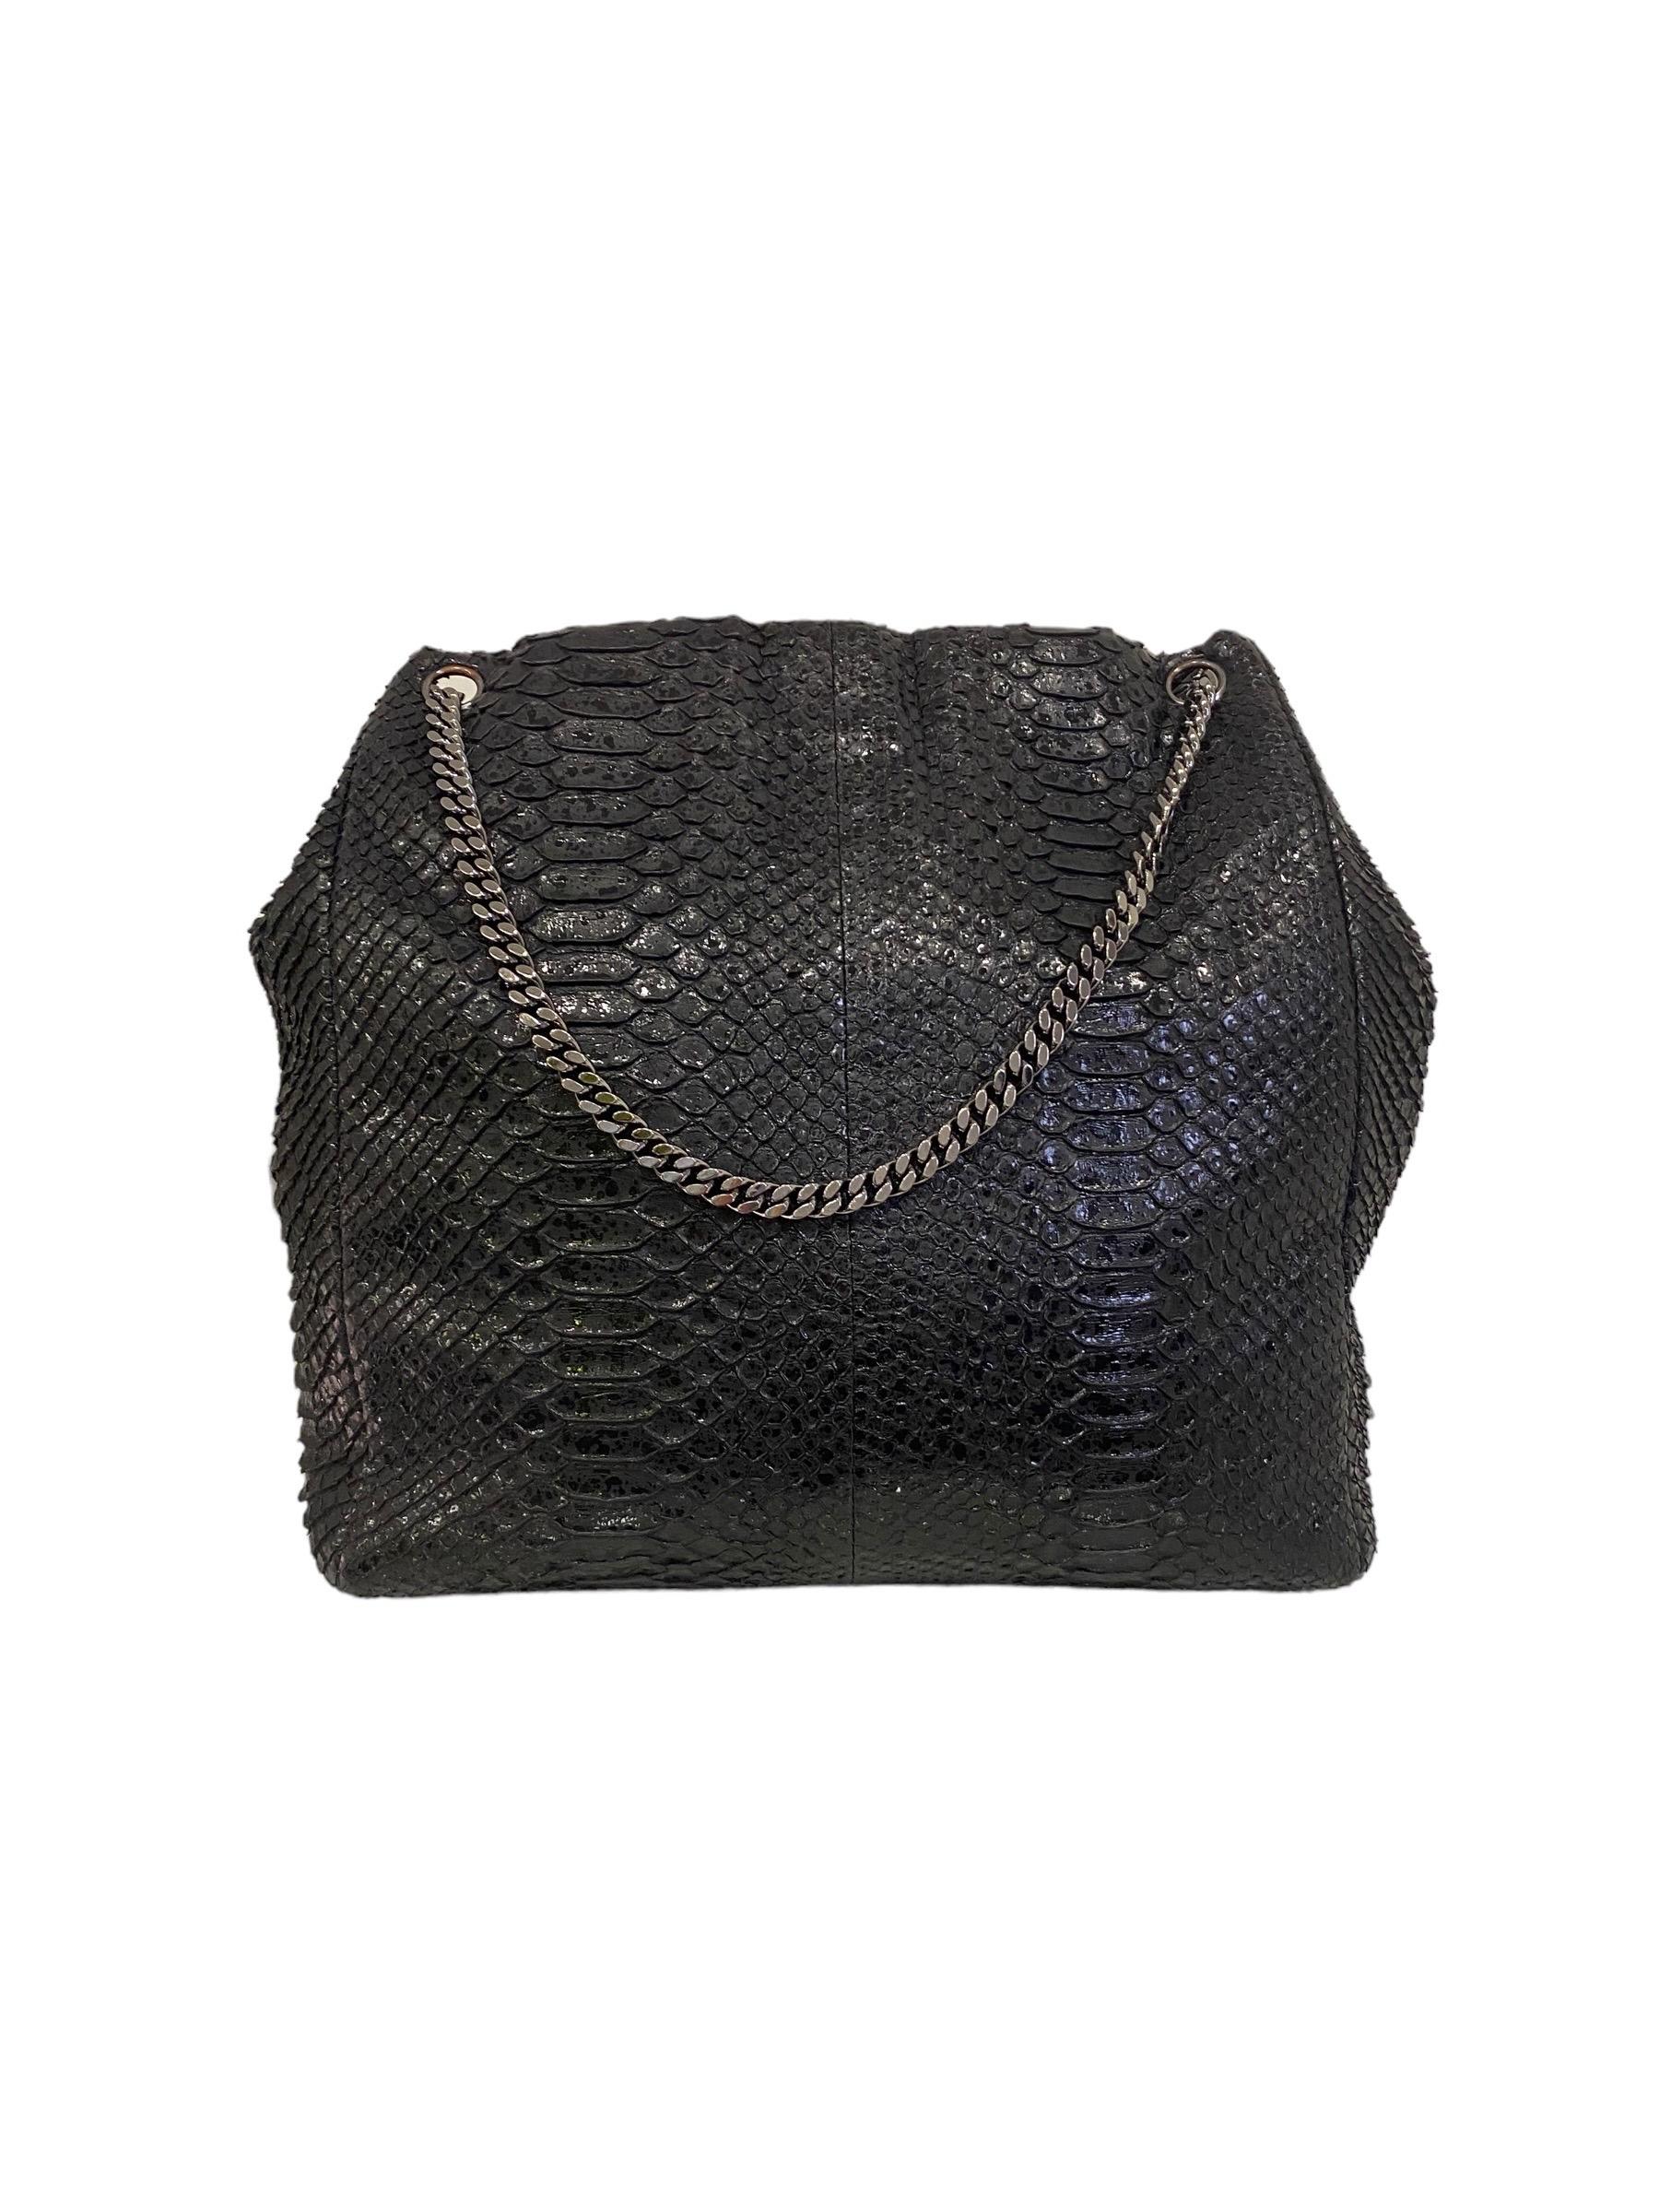 2009 Chanel Tote Black Piton Hobo Bag For Sale 1